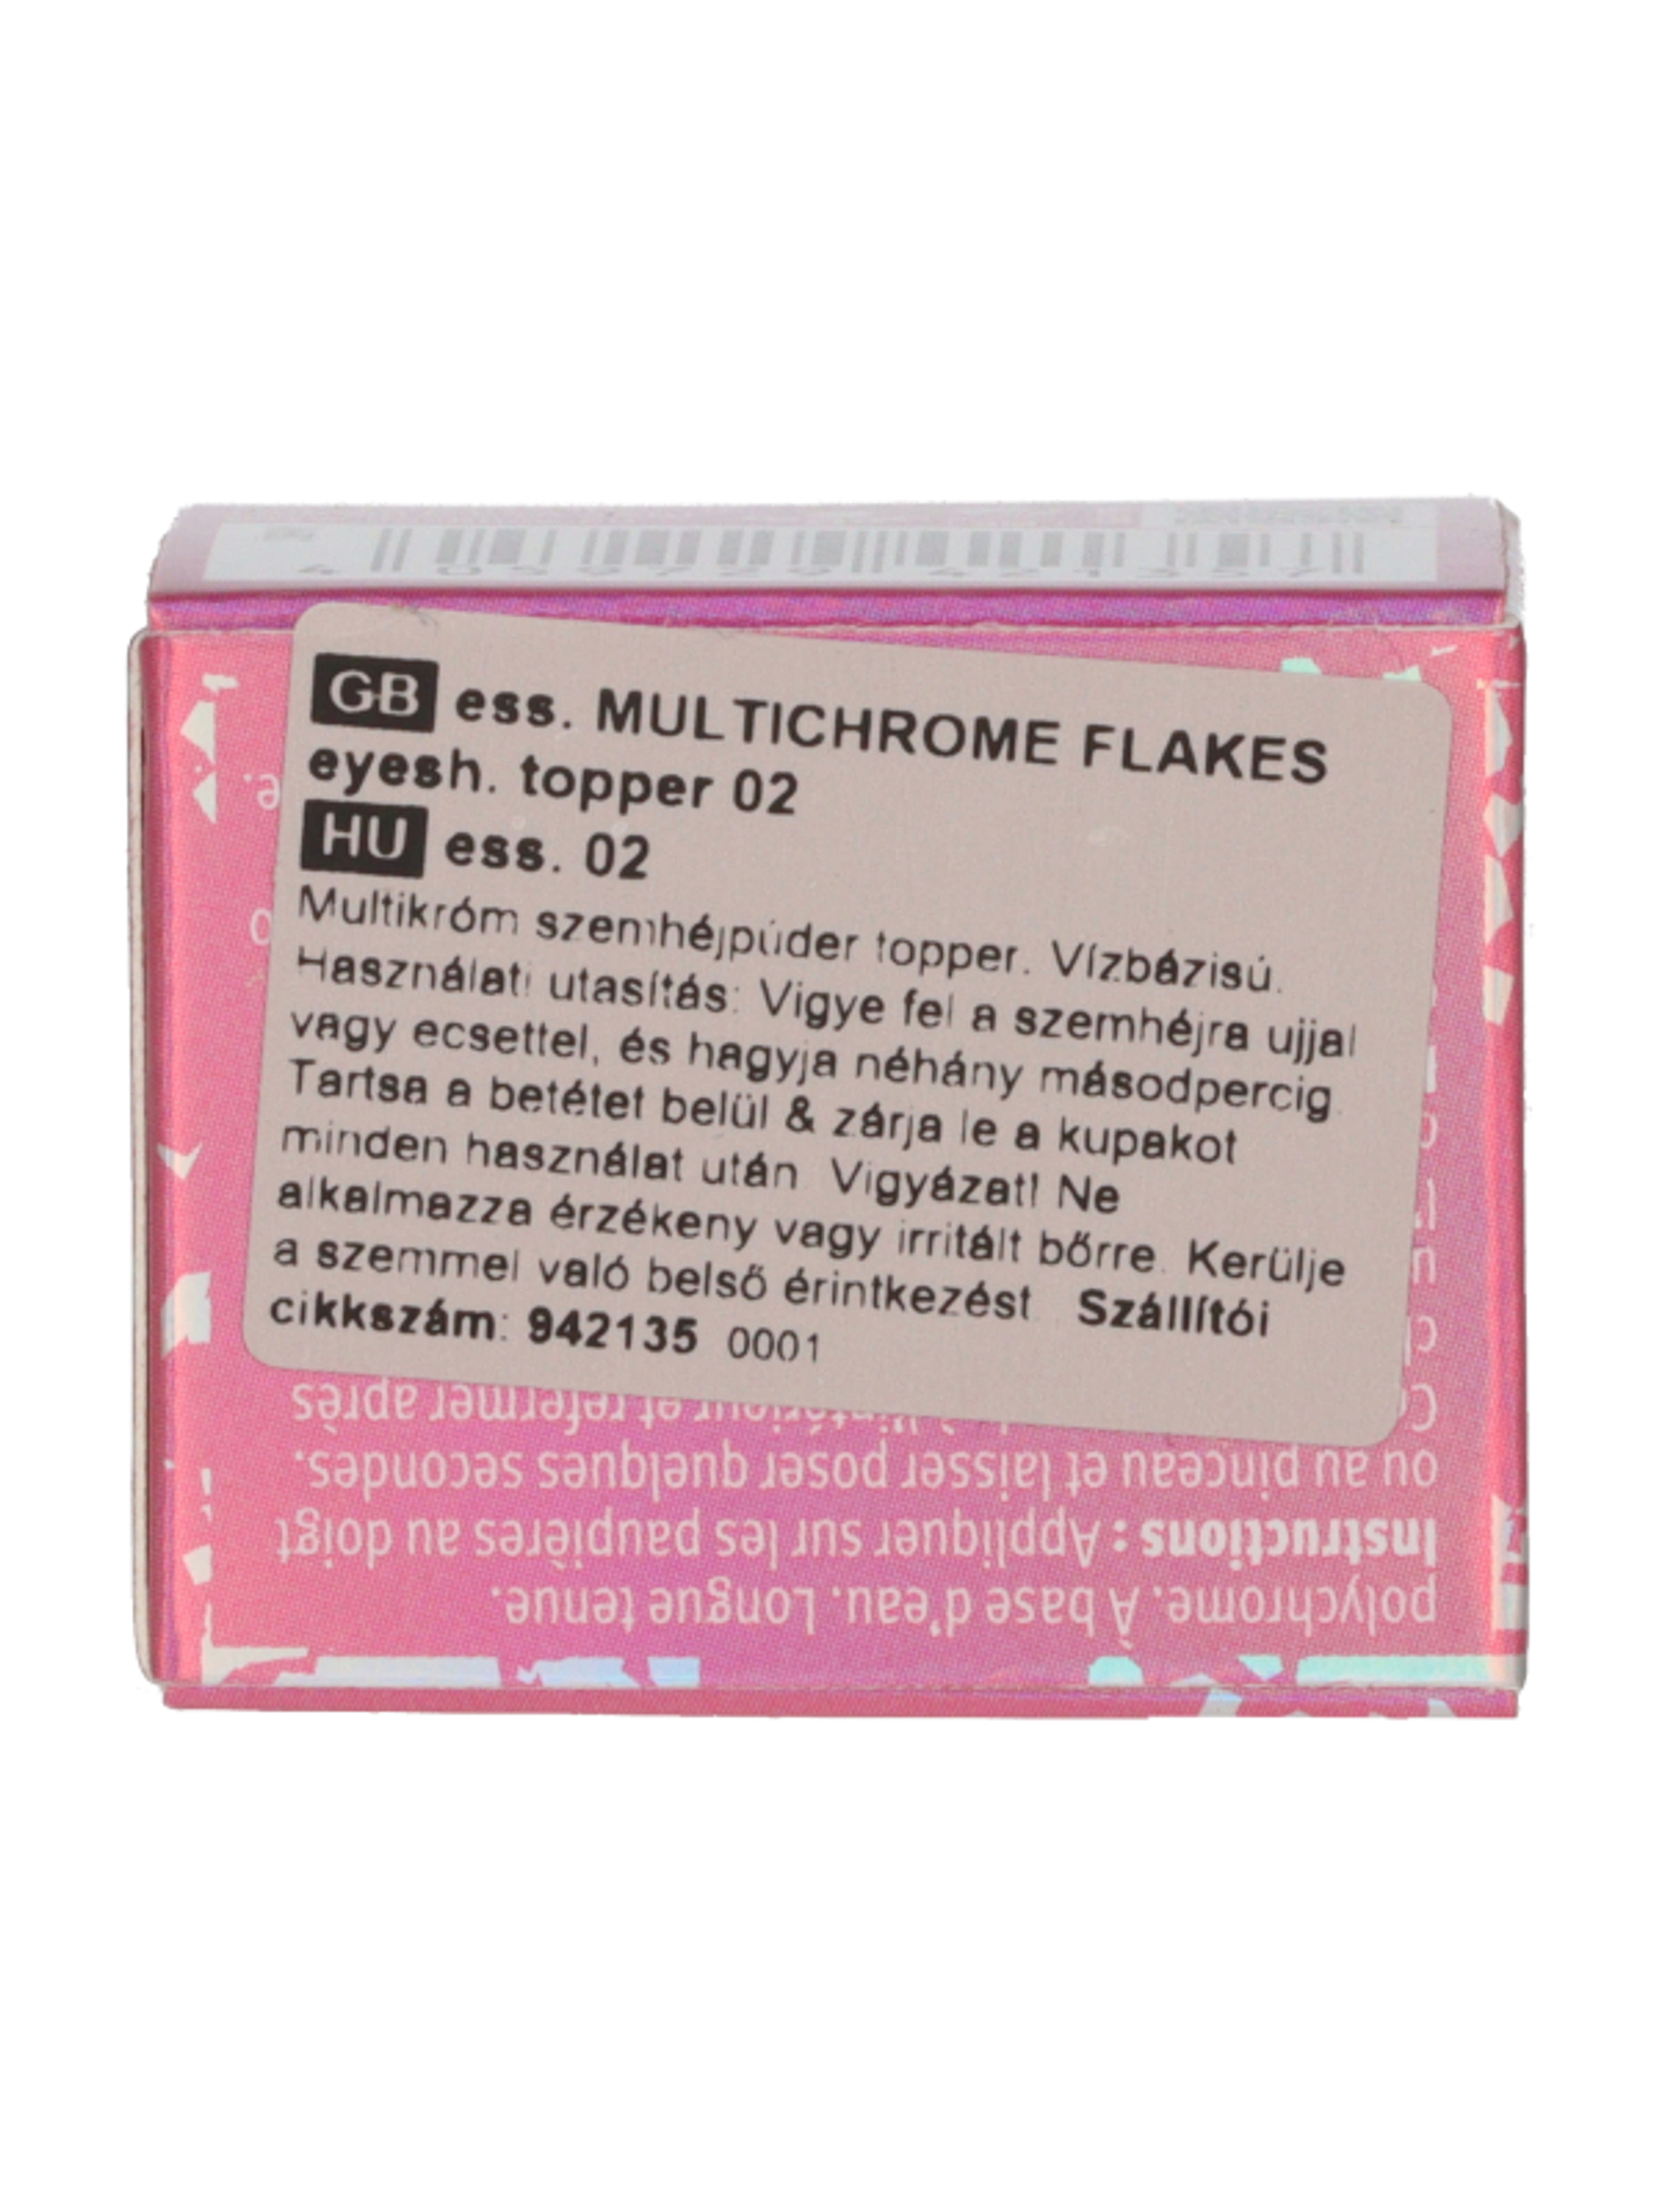 Essence Multichrome Flakes szemhéjpúder topper /02 - 1 db-3